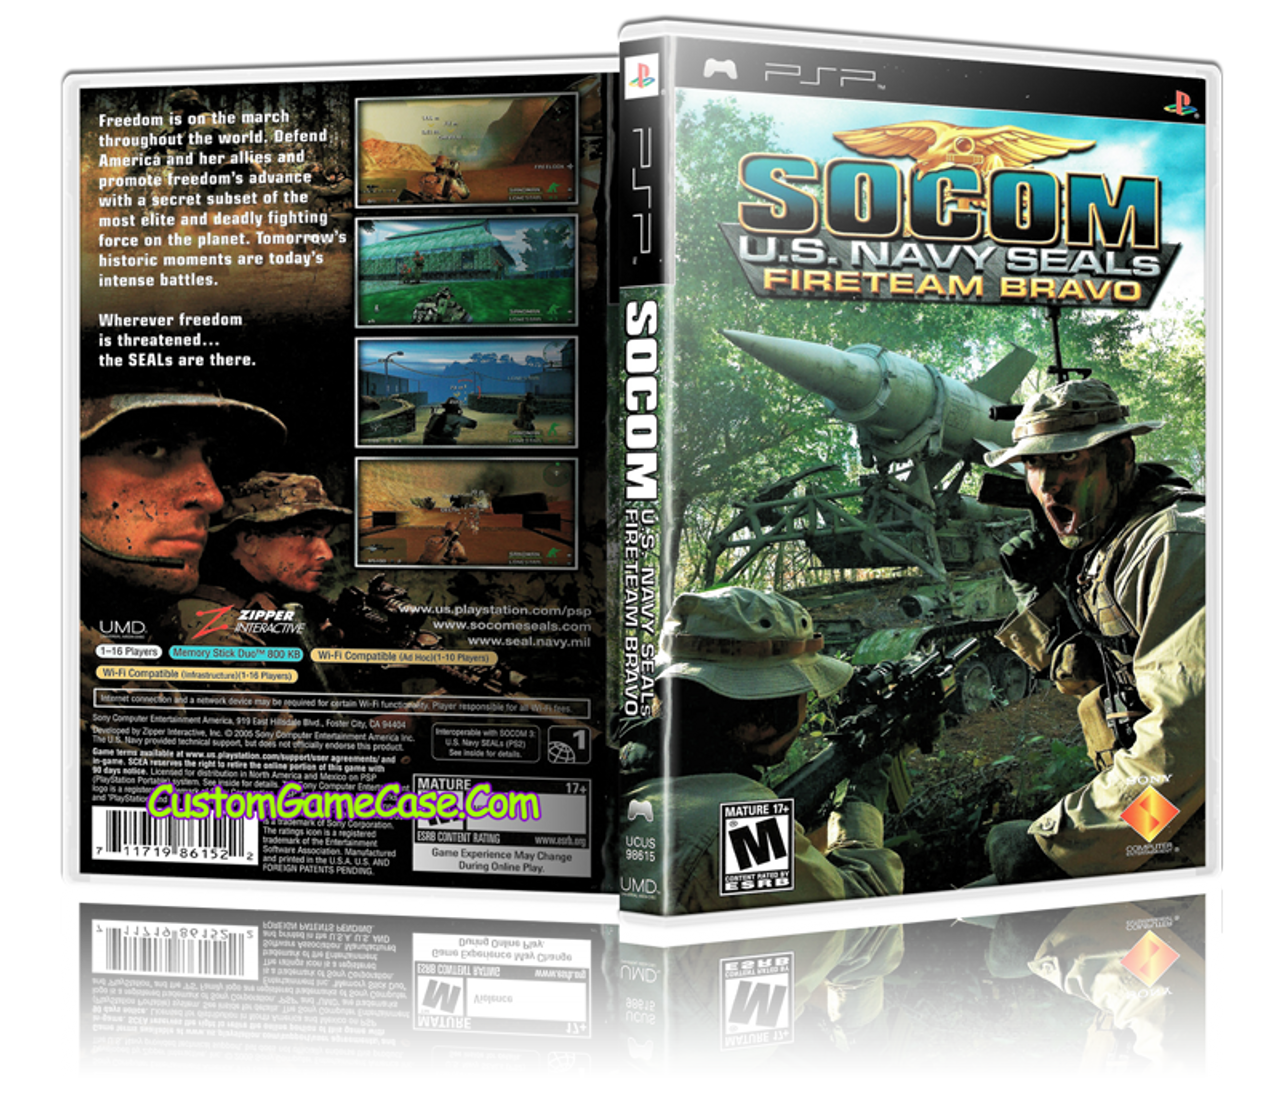 Socom U.S. Navy Seals Fireteam Bravo - Sony PlayStation Portable